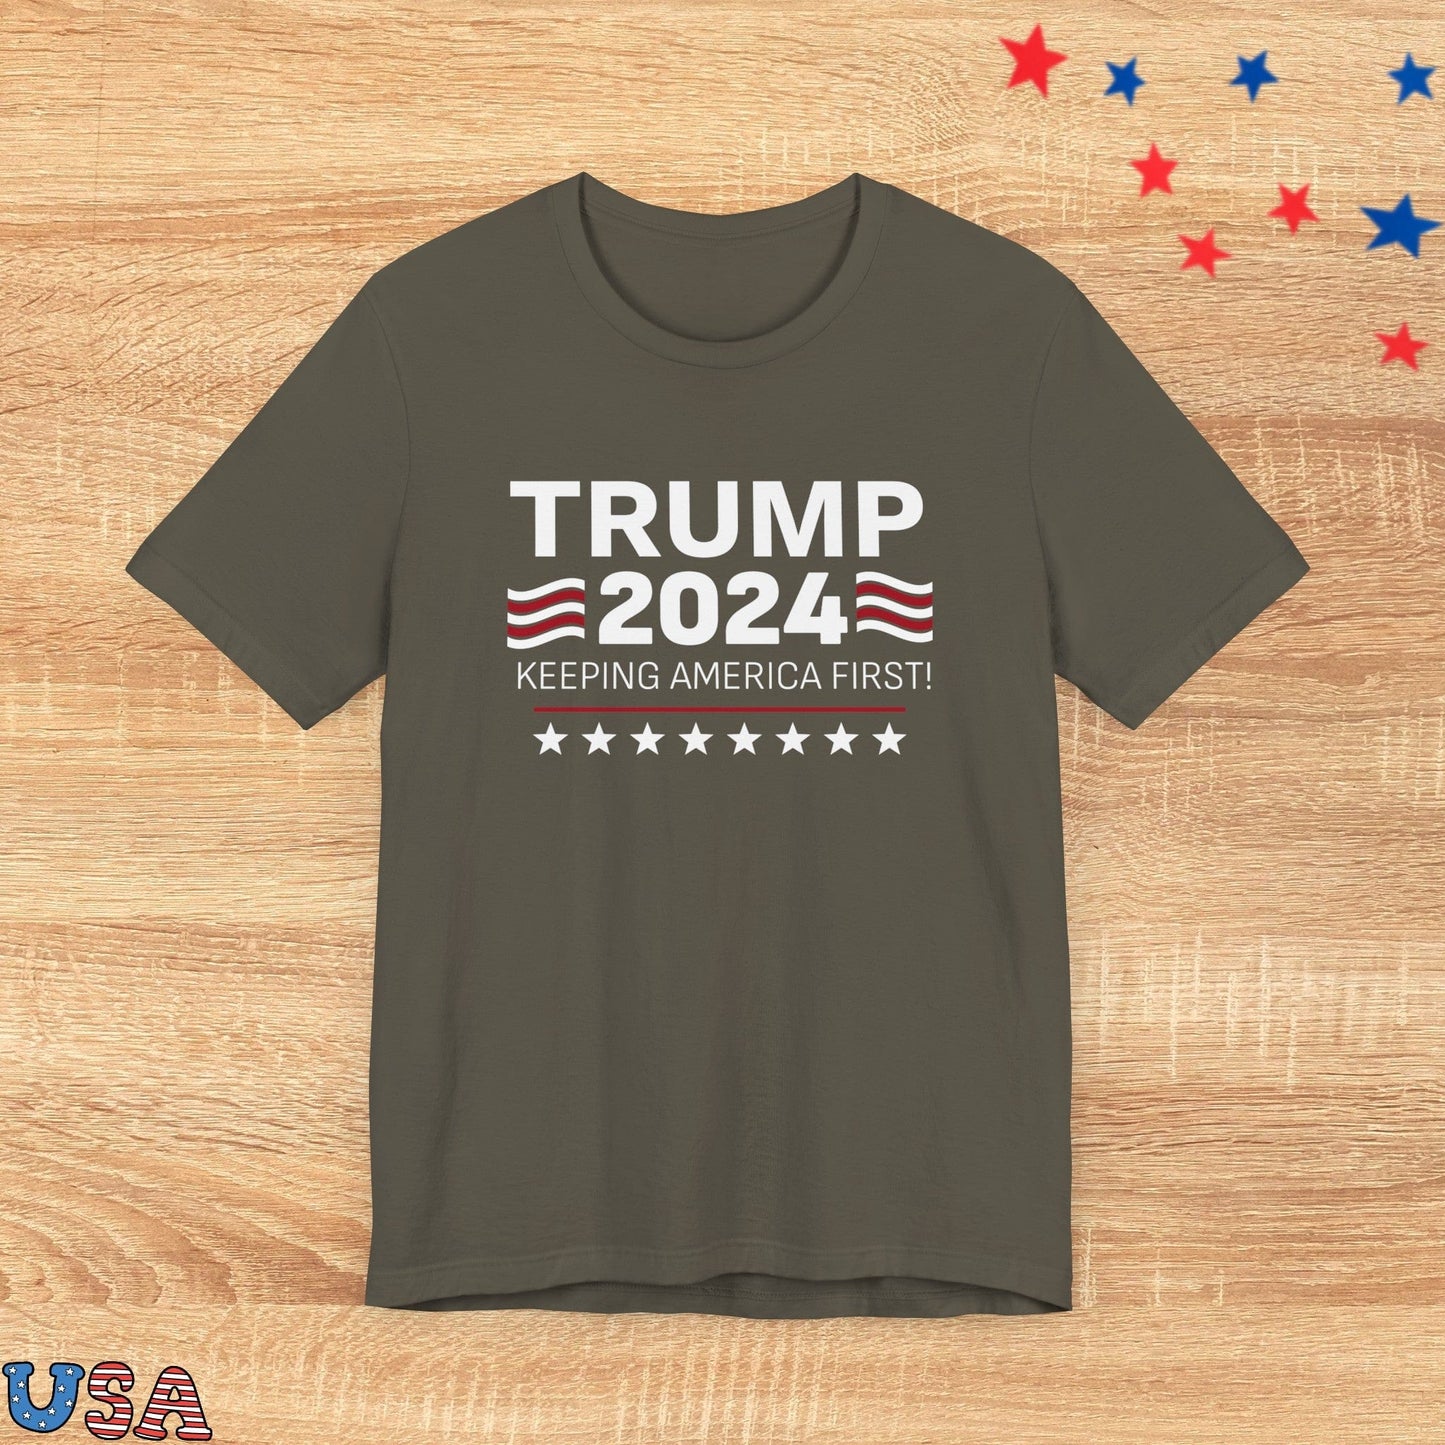 patriotic stars T-Shirt Army / XS Trump 2024 Keeping America First!